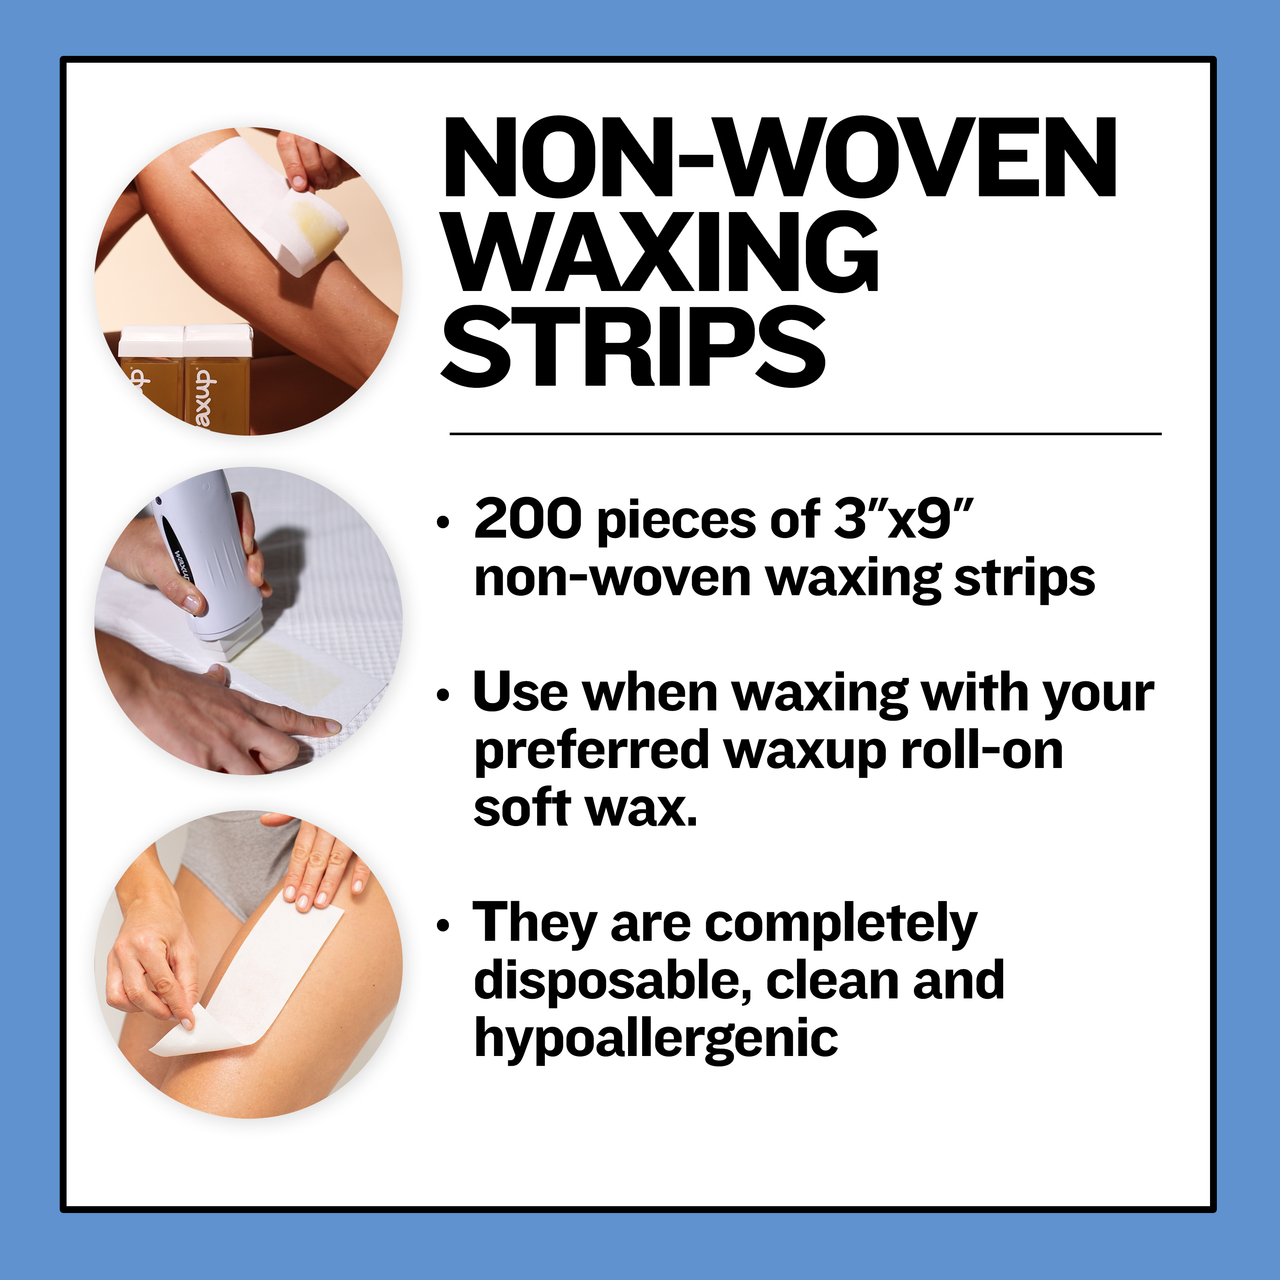 Non Woven Waxing Strips 3"x9" 200 Count Buy with Prime - thatswaxup -  - Non Woven Waxing Strips - waxup hair removal wax body waxing kit women and men professional waxing supplies